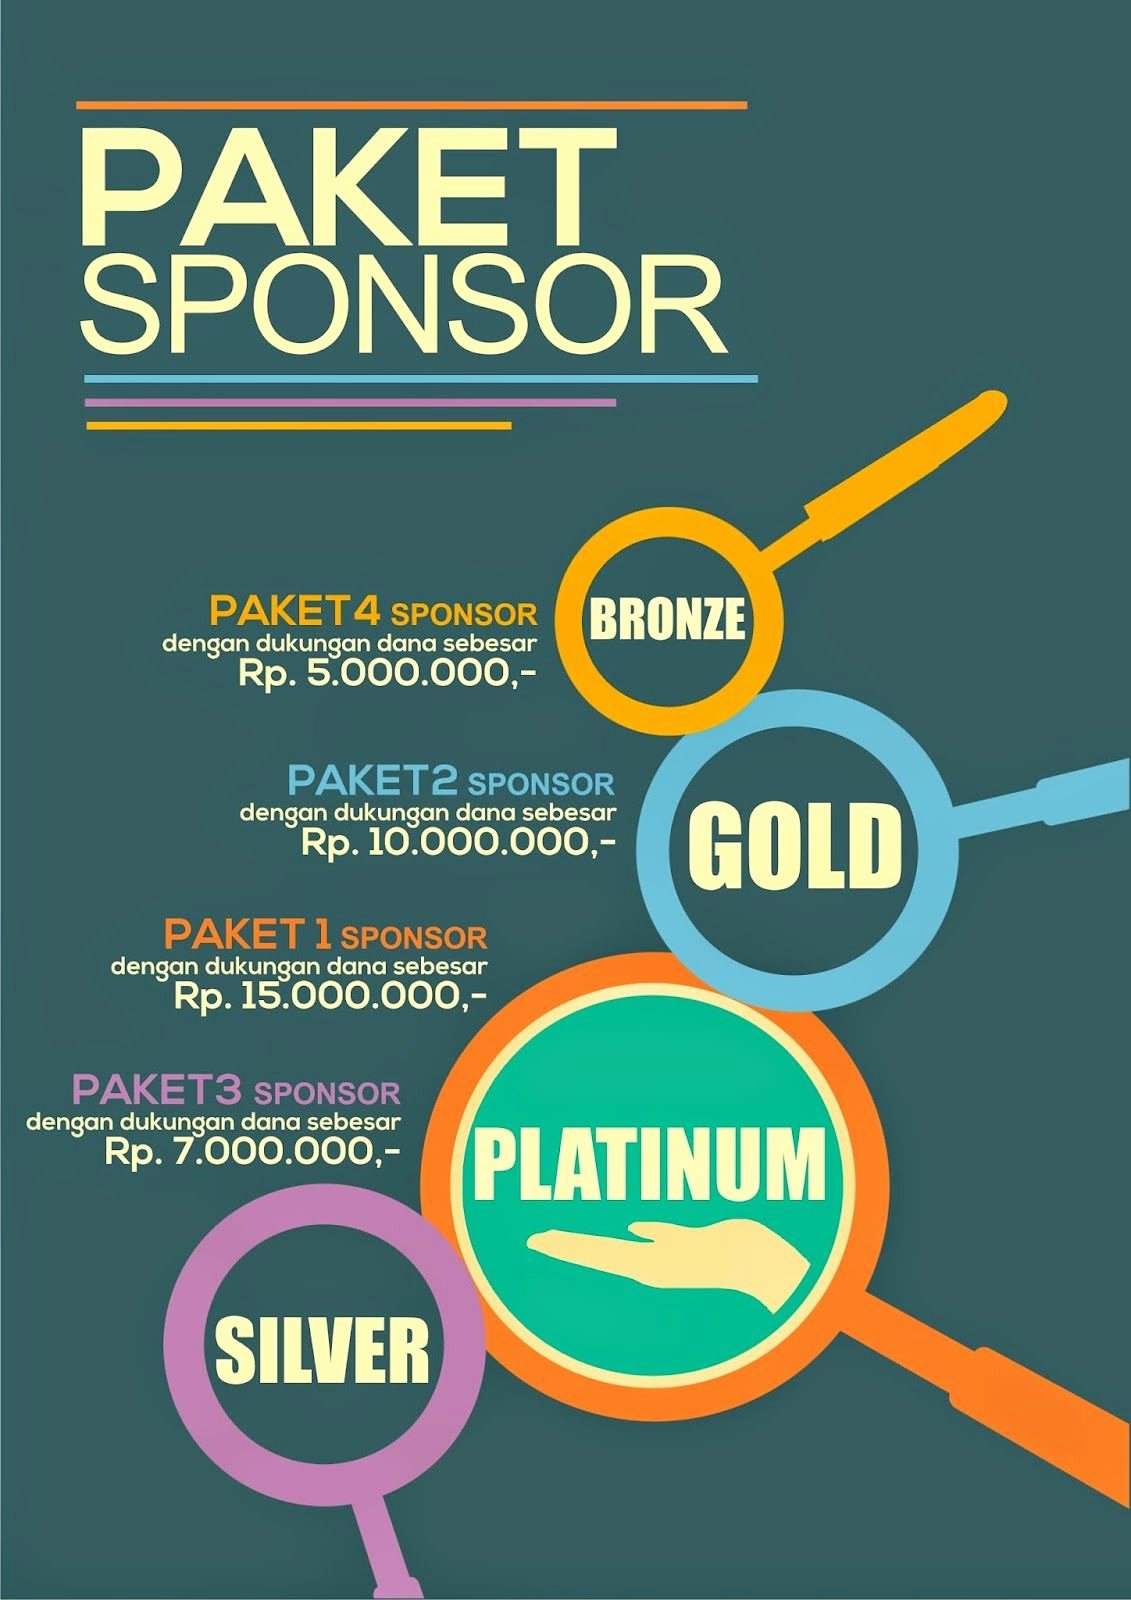 sponsorship packet template fresh sponsorship proposal design google search of sponsorship packet template